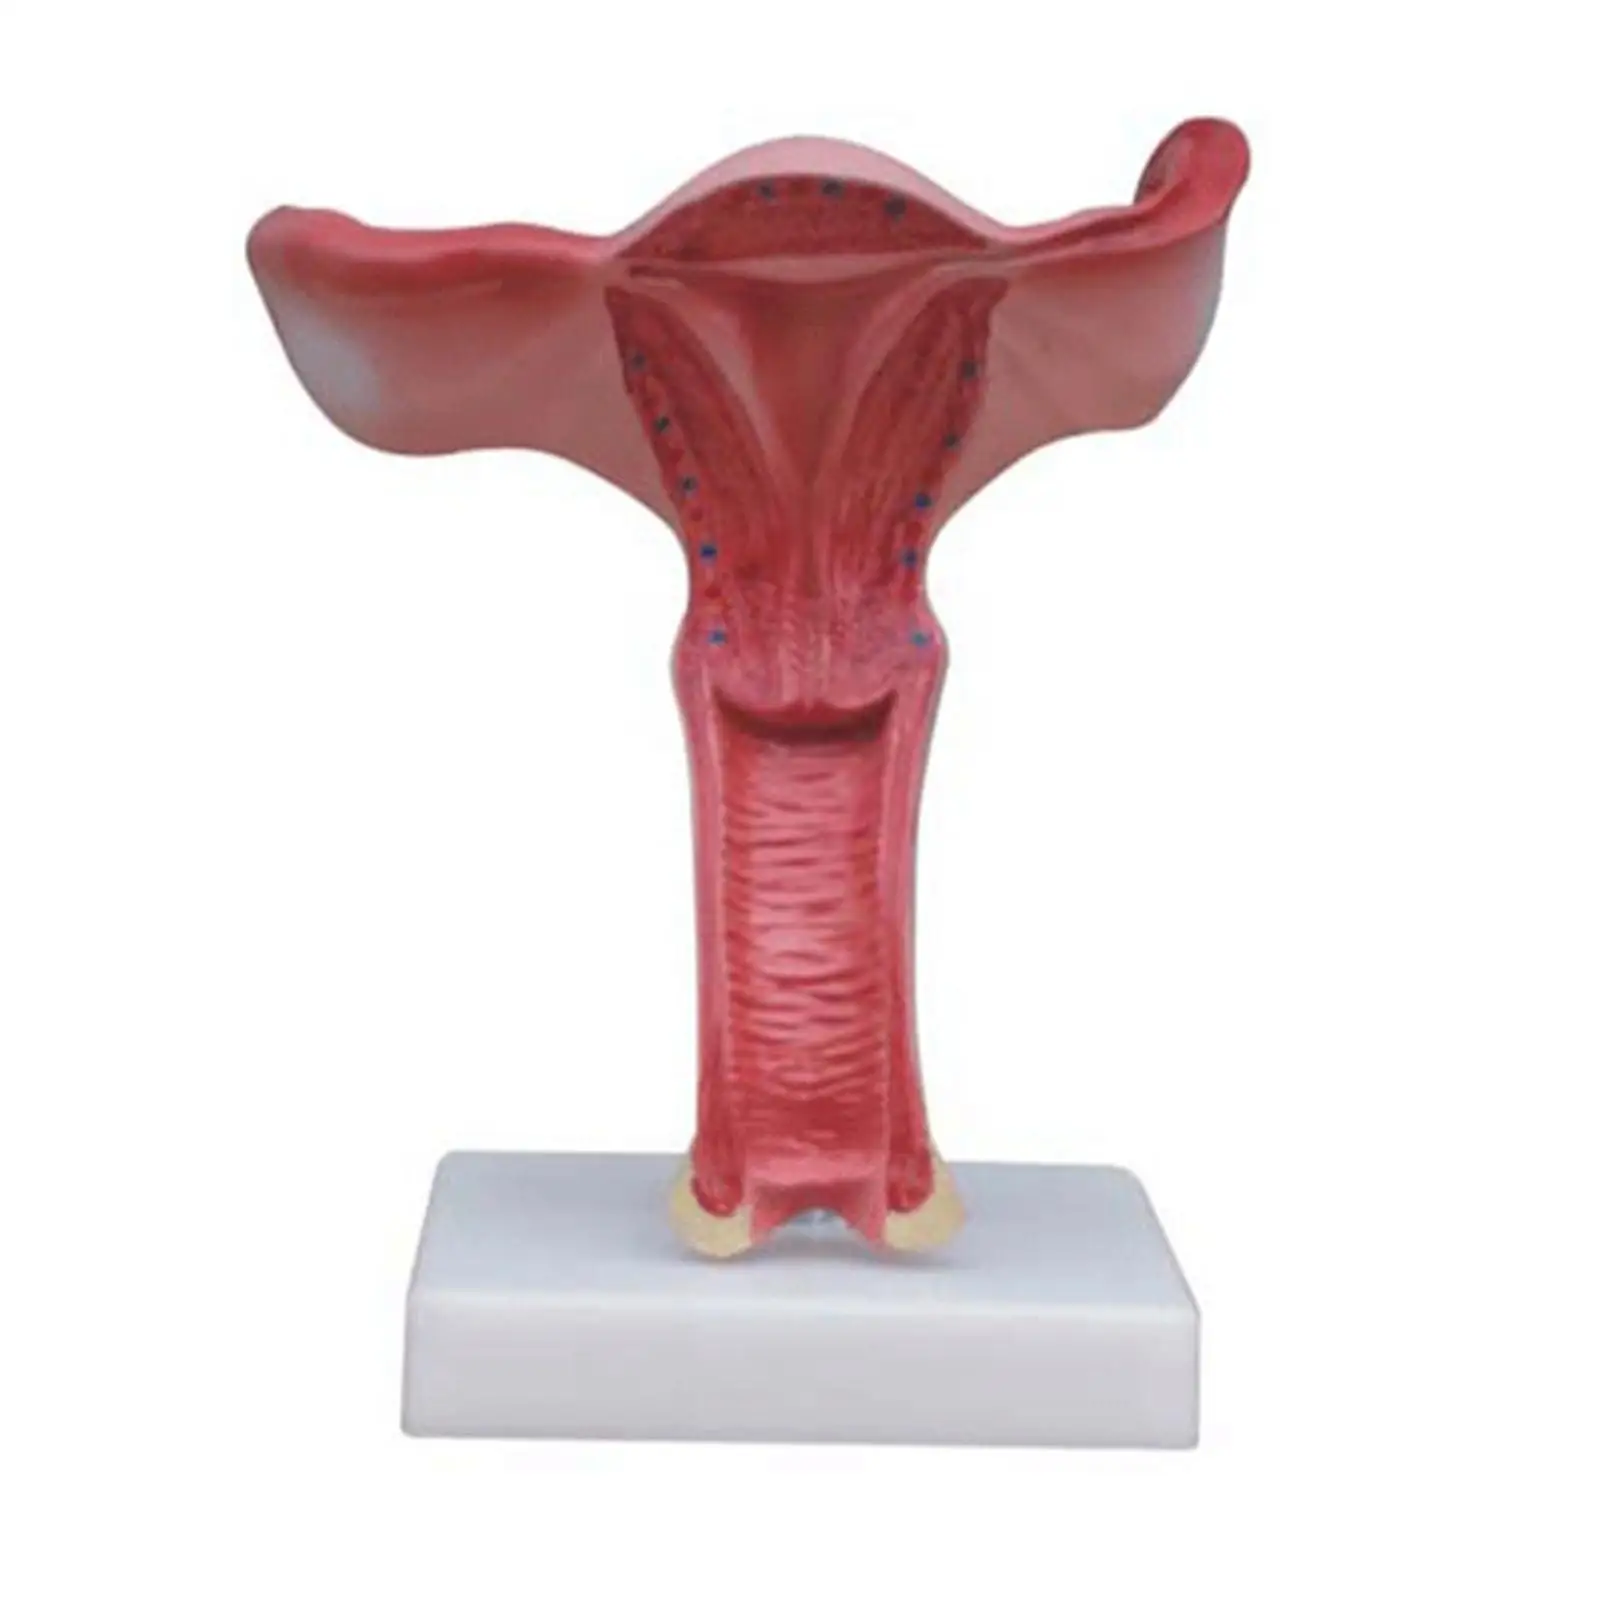 

1.5X Magnified Human Female Uterus Anatomy Medical Model Professional Education